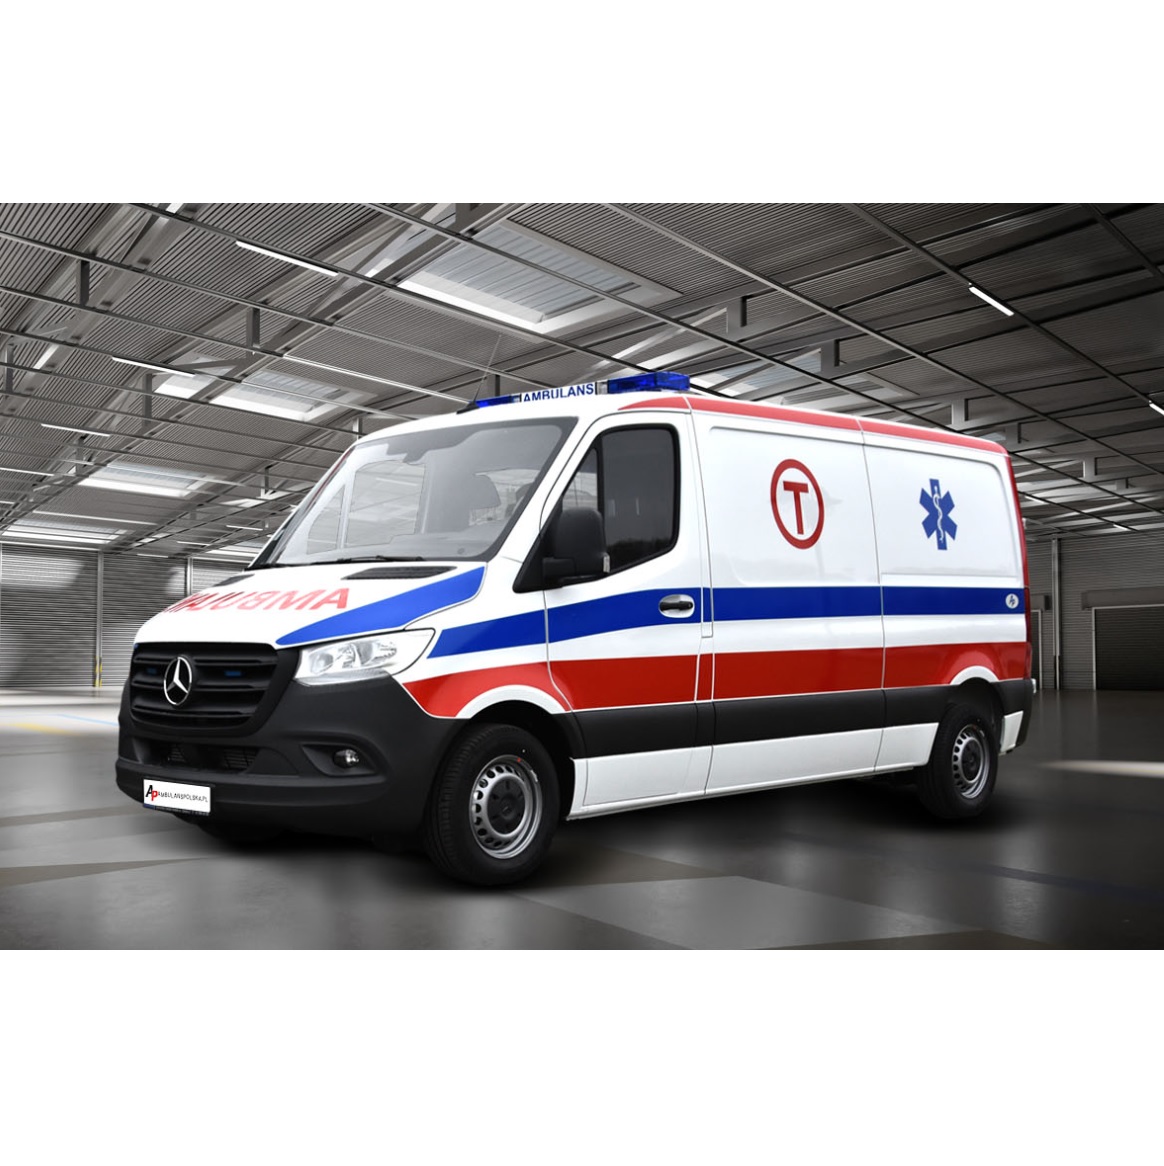 Ambulanse Ambulans Polska A2